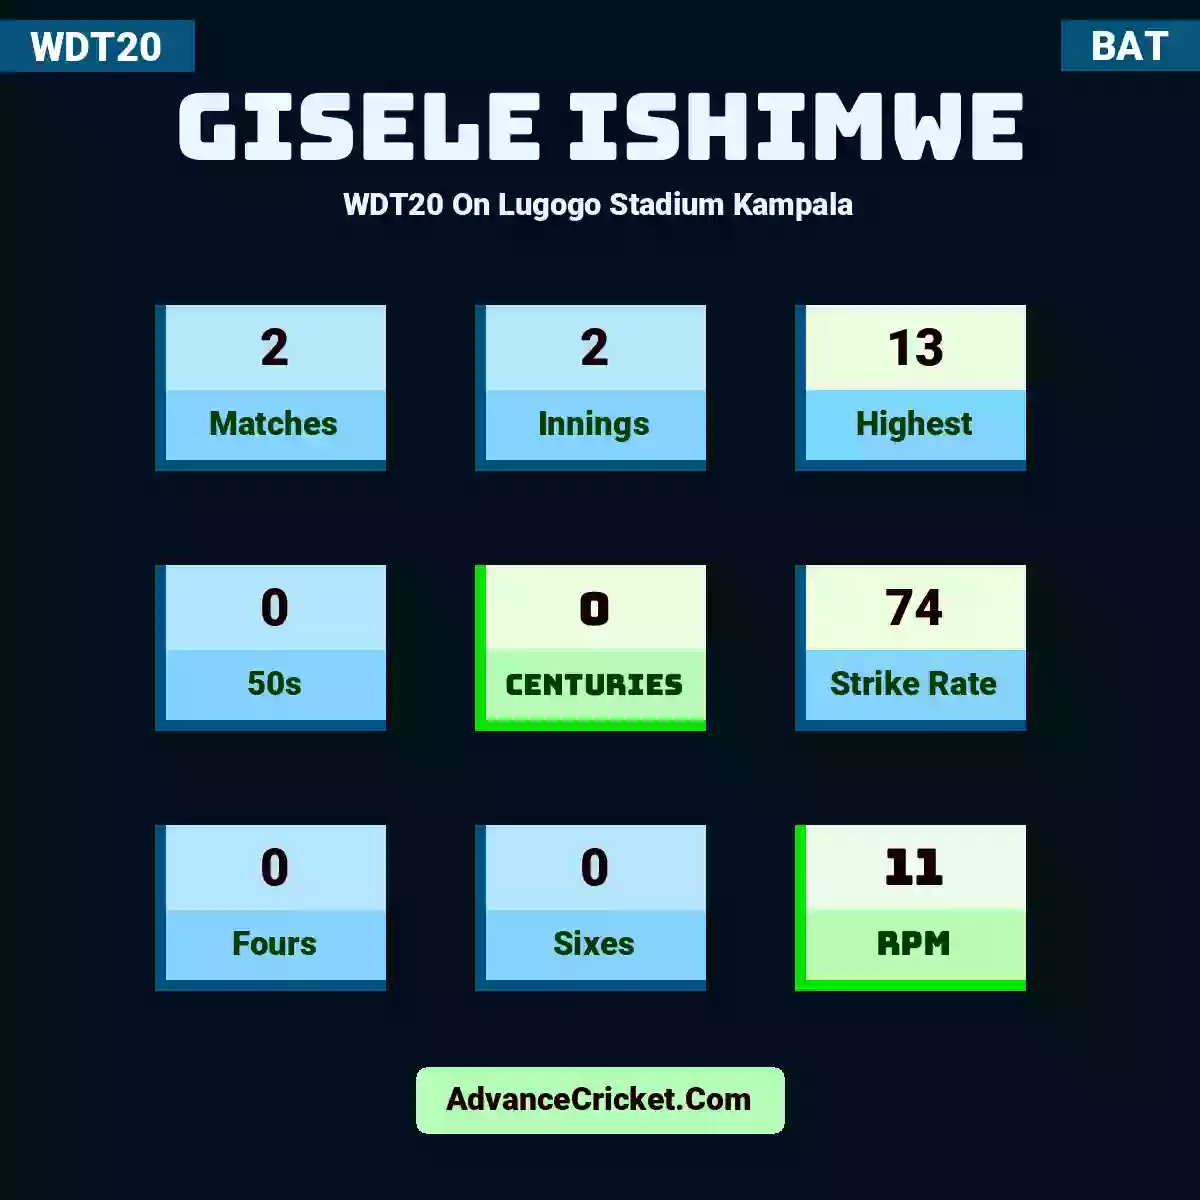 Gisele Ishimwe WDT20  On Lugogo Stadium Kampala, Gisele Ishimwe played 2 matches, scored 13 runs as highest, 0 half-centuries, and 0 centuries, with a strike rate of 74. G.Ishimwe hit 0 fours and 0 sixes, with an RPM of 11.